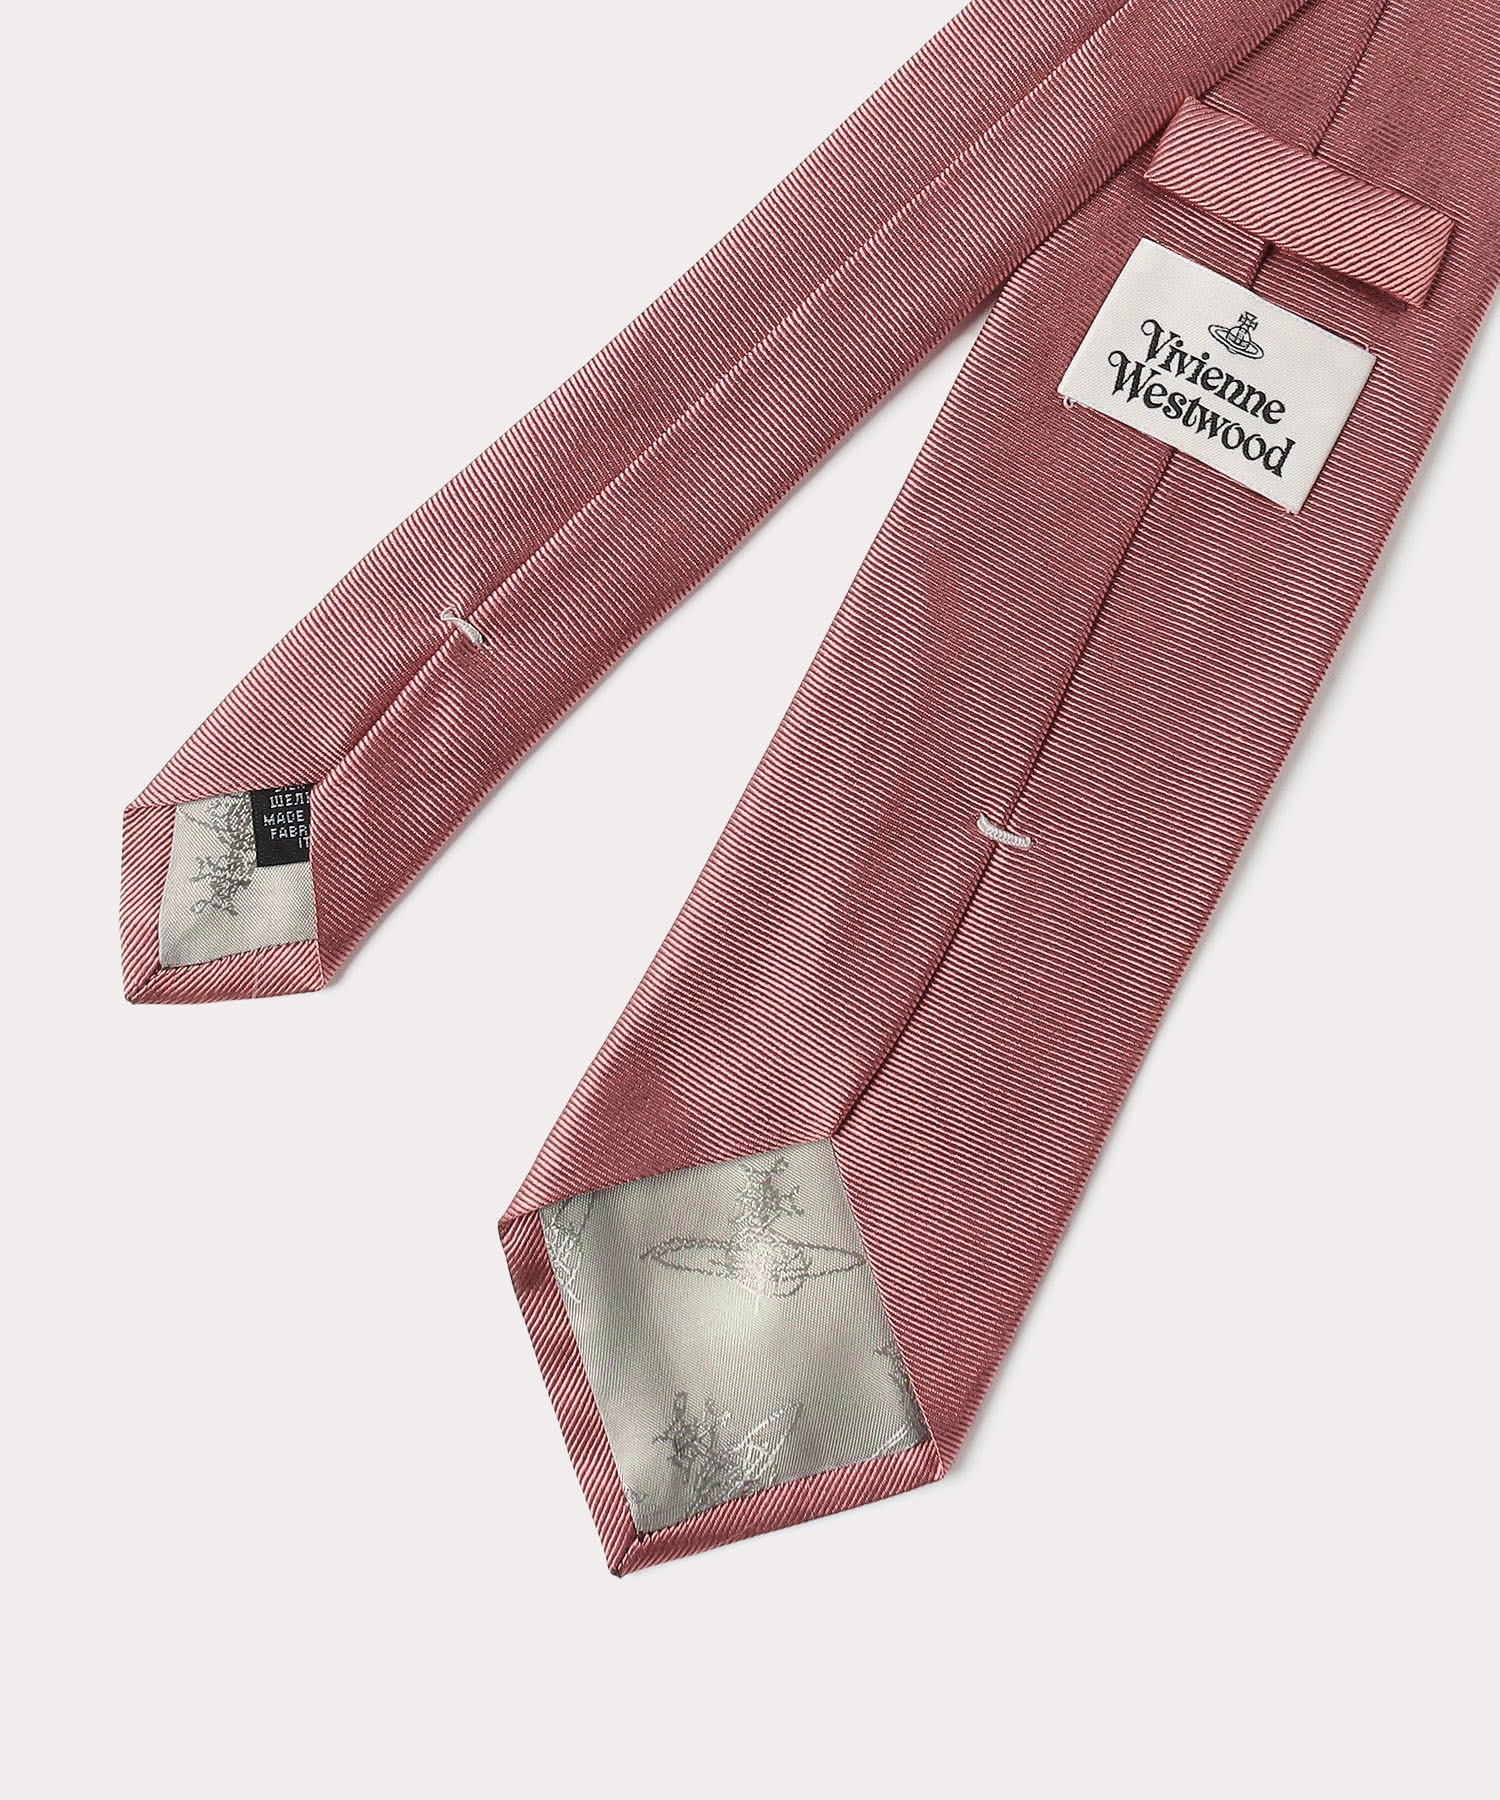 Vivienne Westwood ネクタイ 3本セット